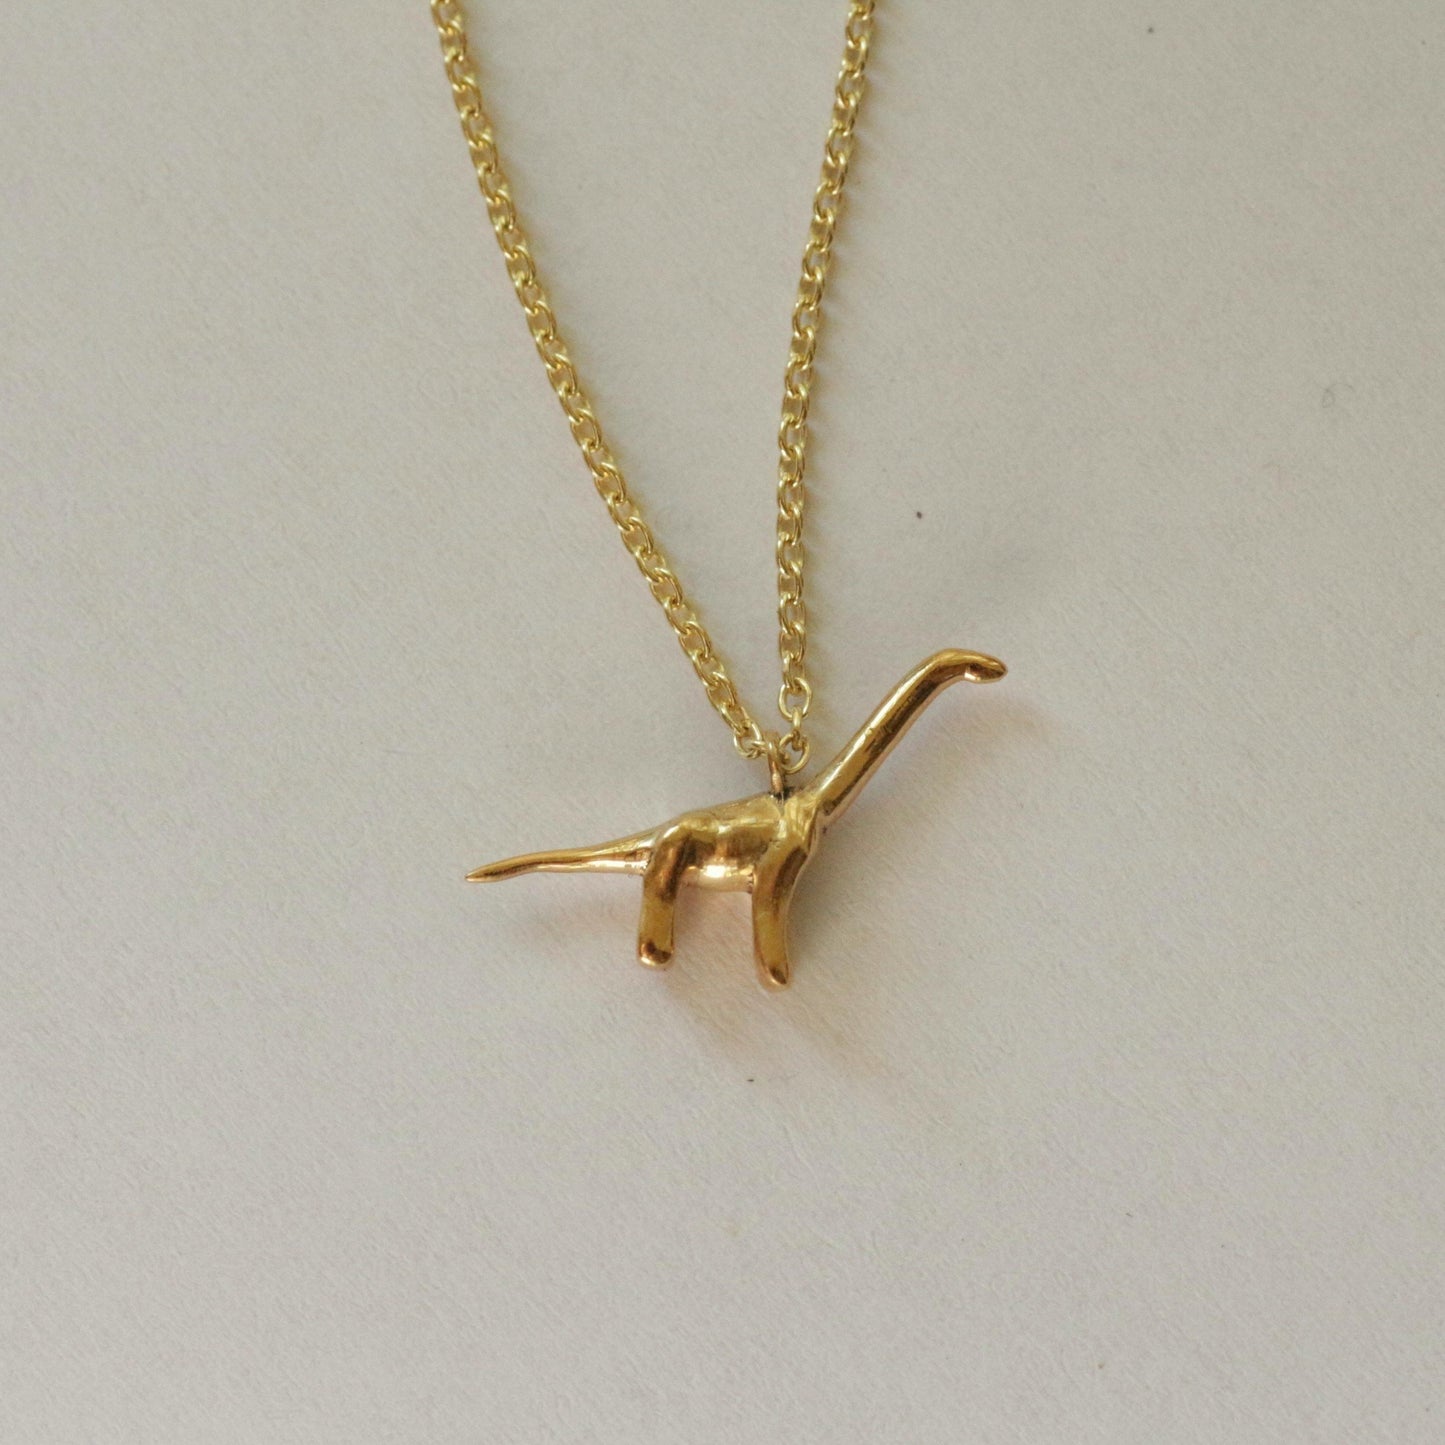 Brontosaurus necklace 14k gold